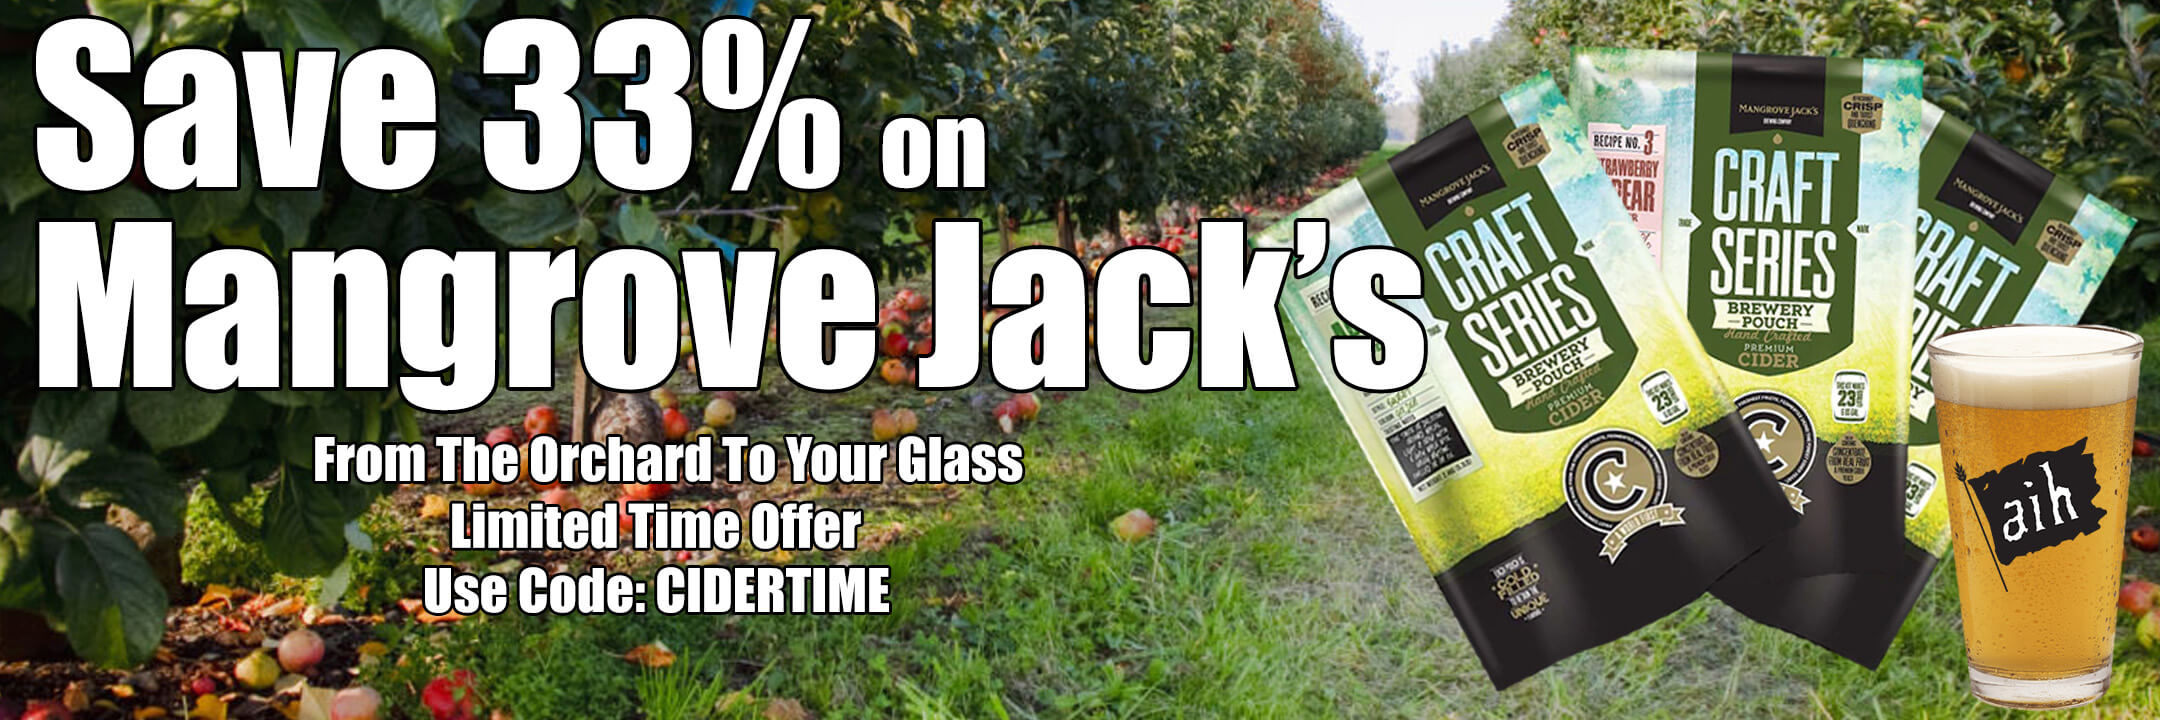 Save 33% on Mangrove Jack's. Use code CIDERTIME